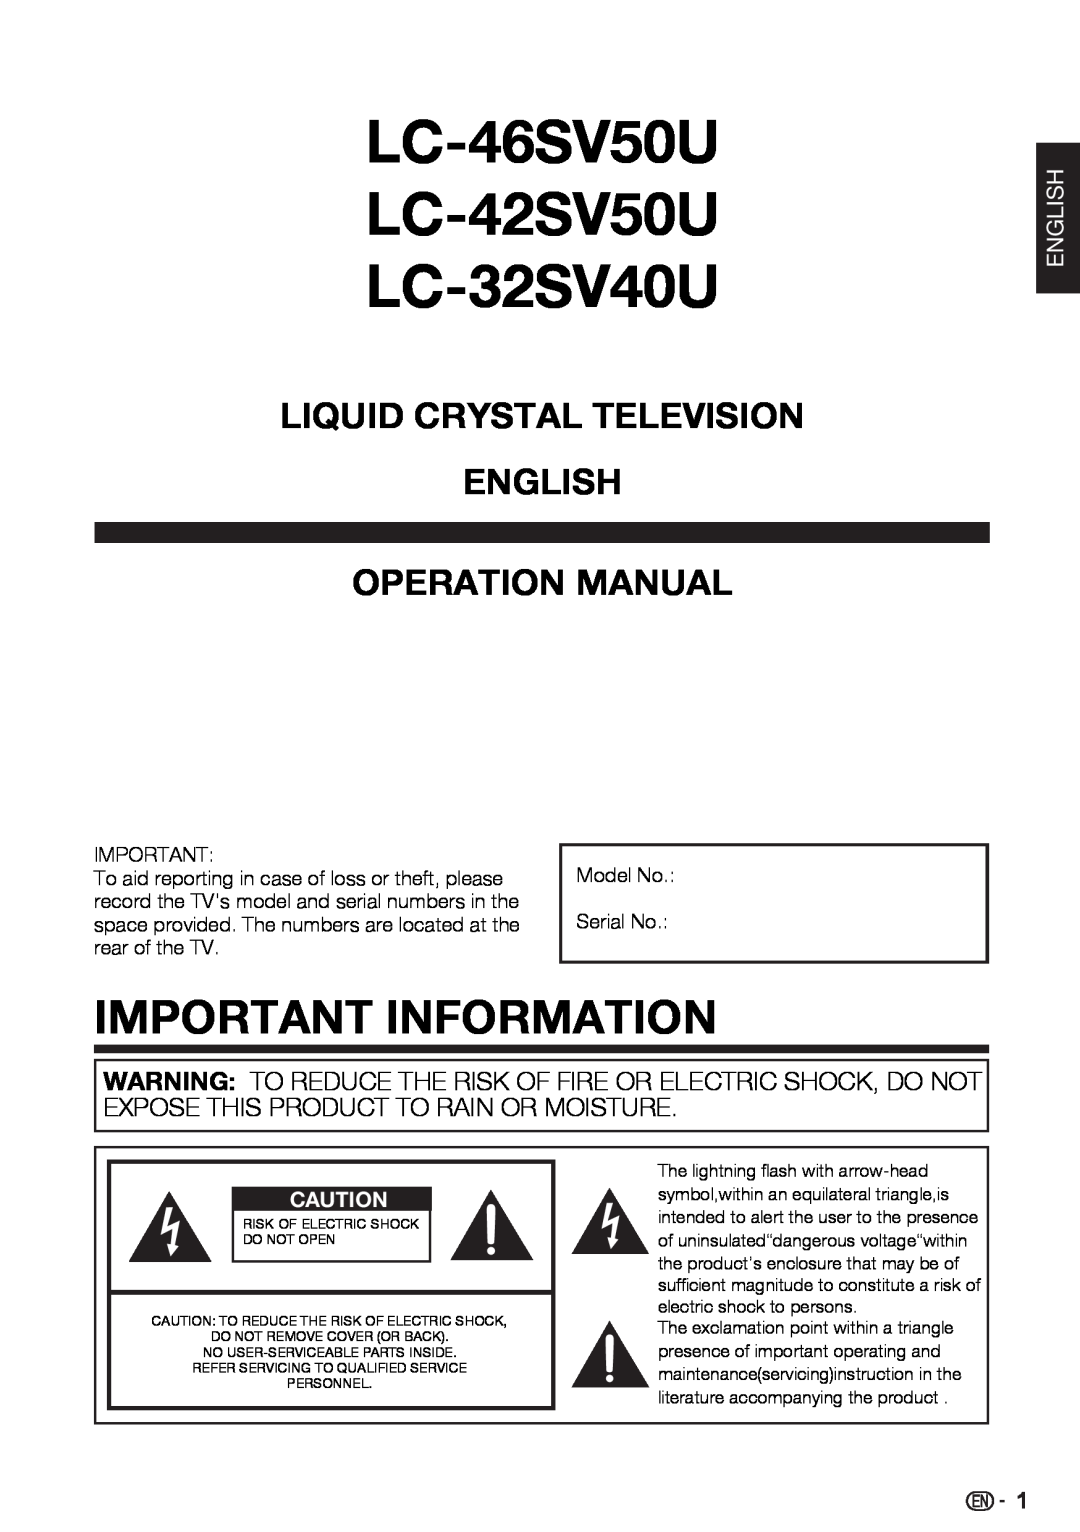 Sharp Liquid Crystal Television English Operation Manual, LC-46SV50U LC-42SV50U LC-32SV40U, Important Information 